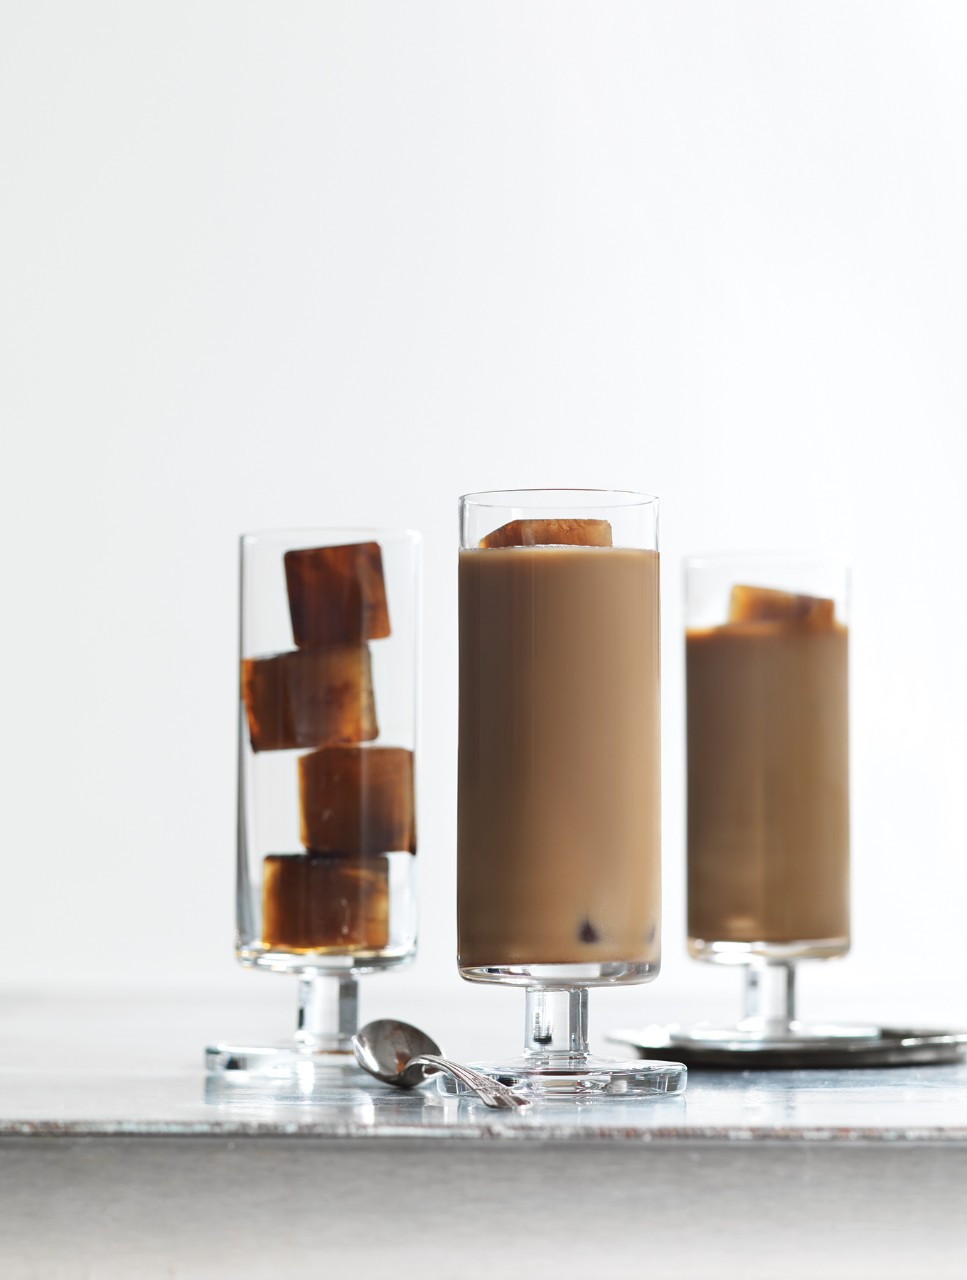 Iced Coffee: Ice Filter Method